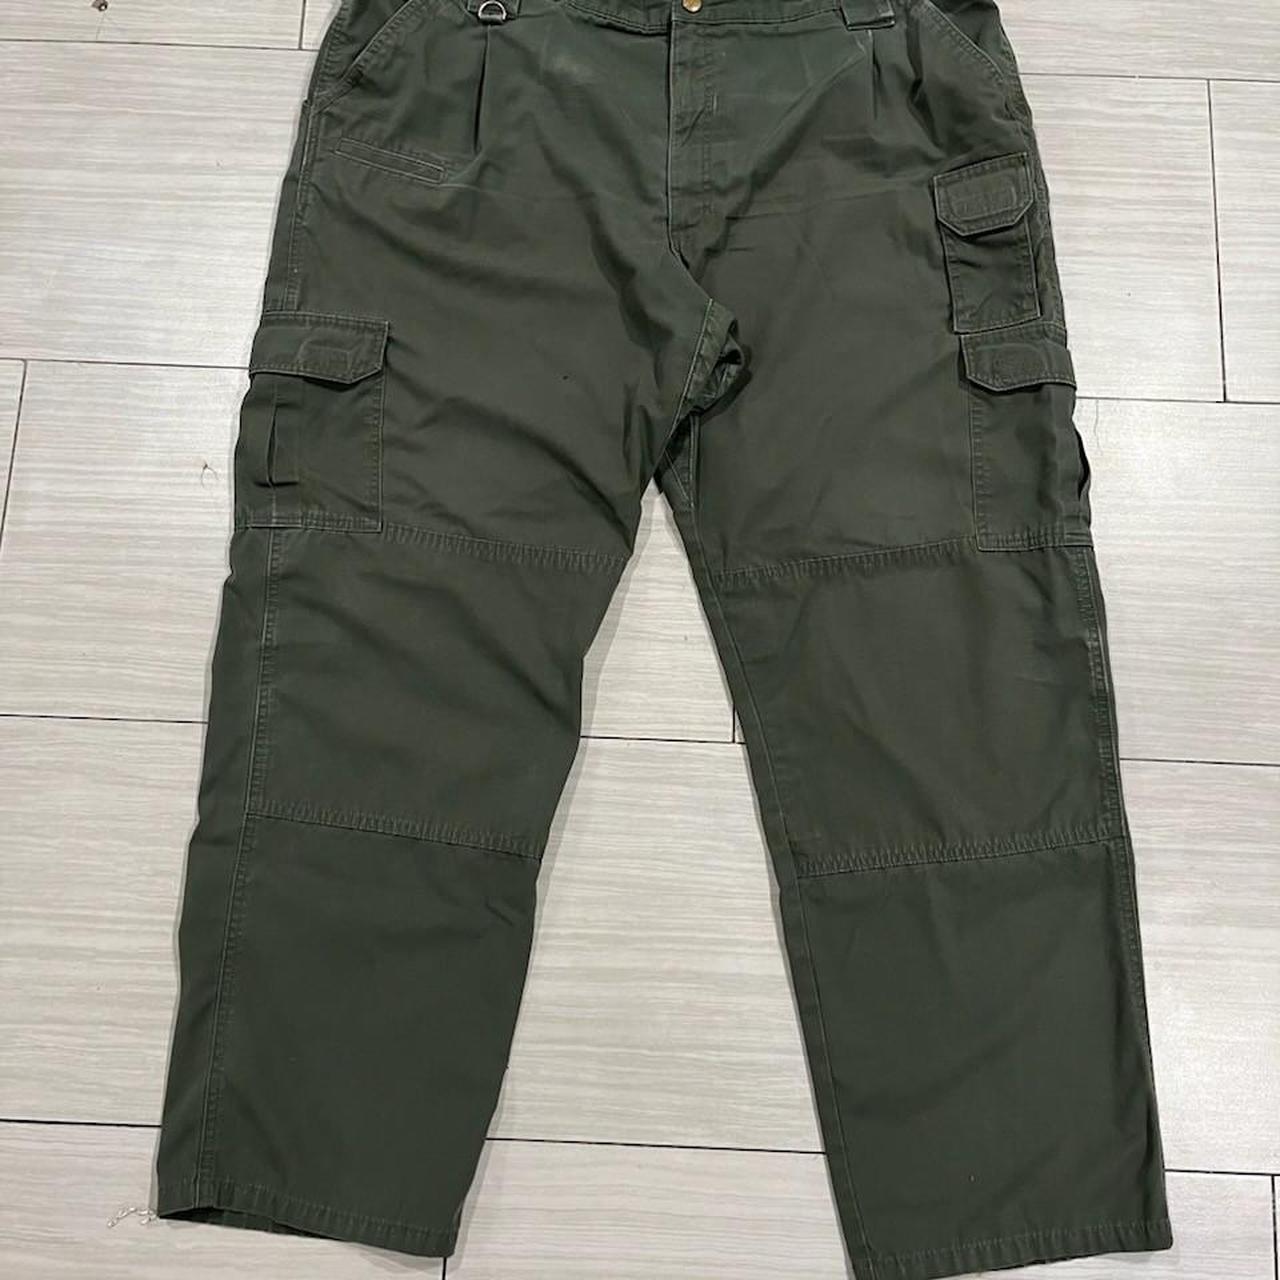 Green military pants - Depop